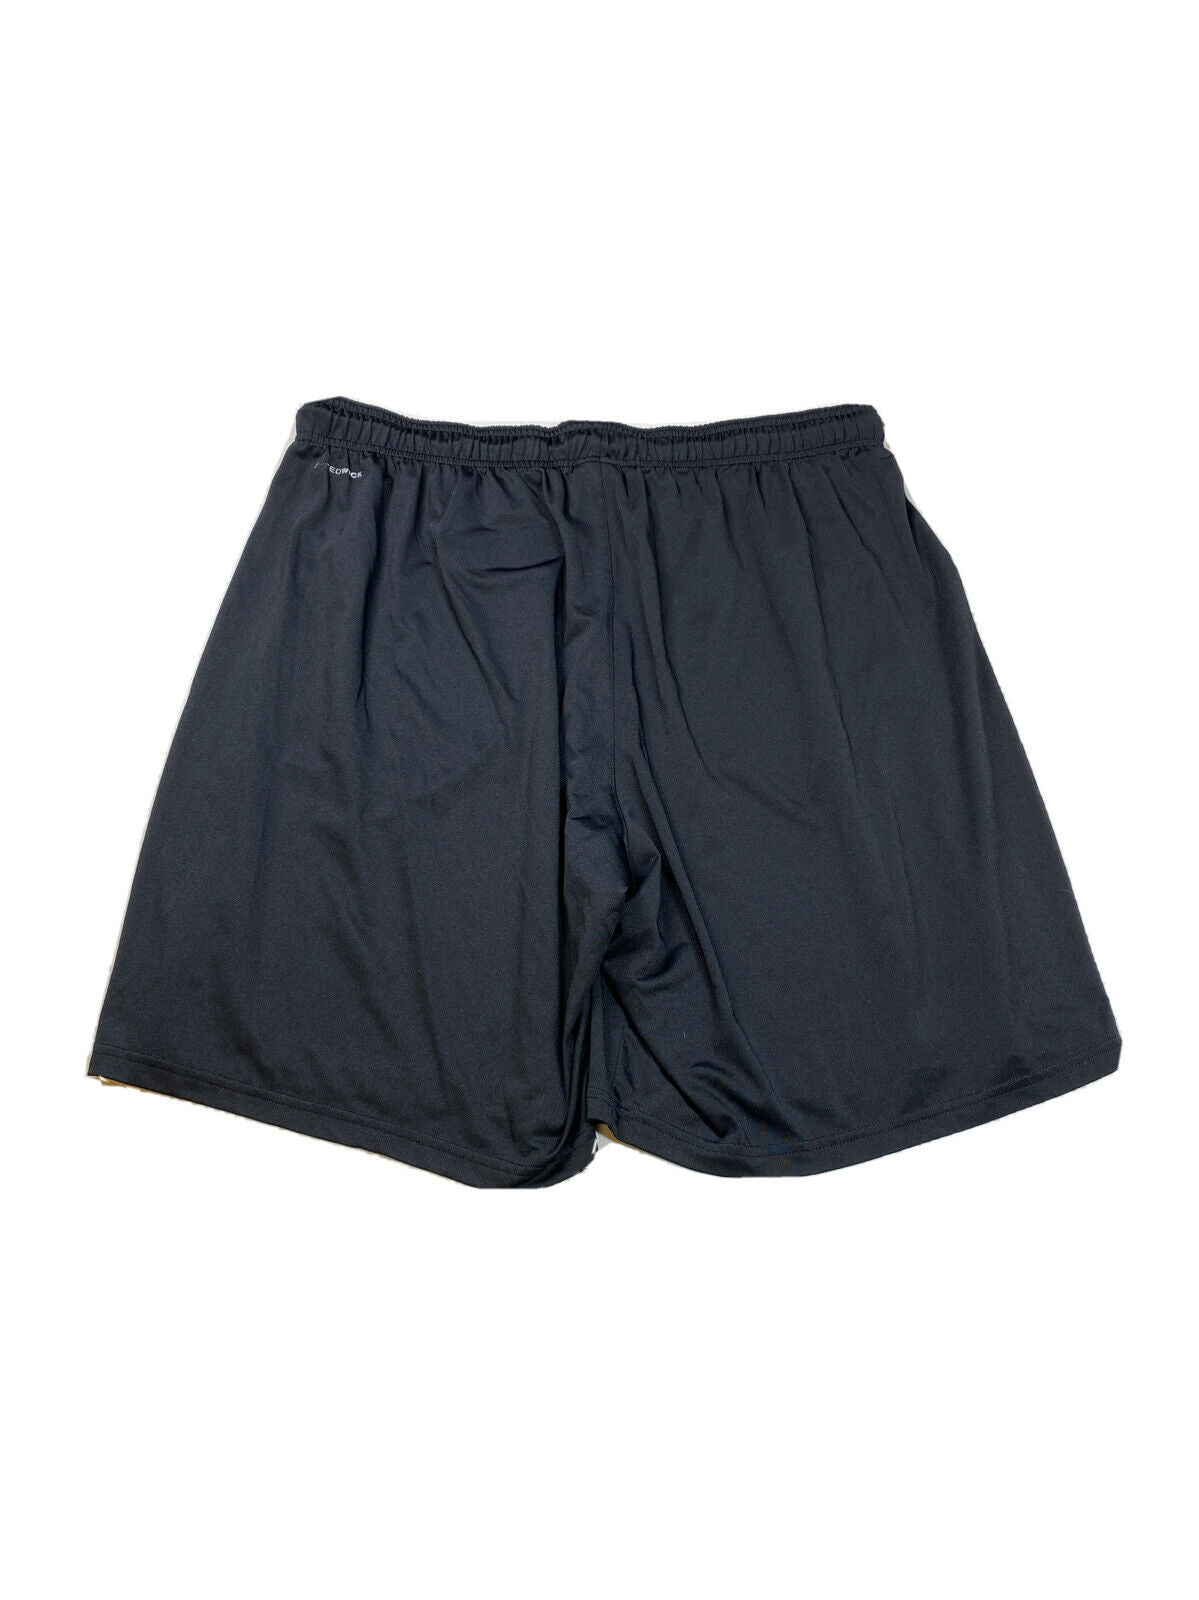 Reebok Men's Black Polyester Athletic Shorts /w Pockets - 2XL